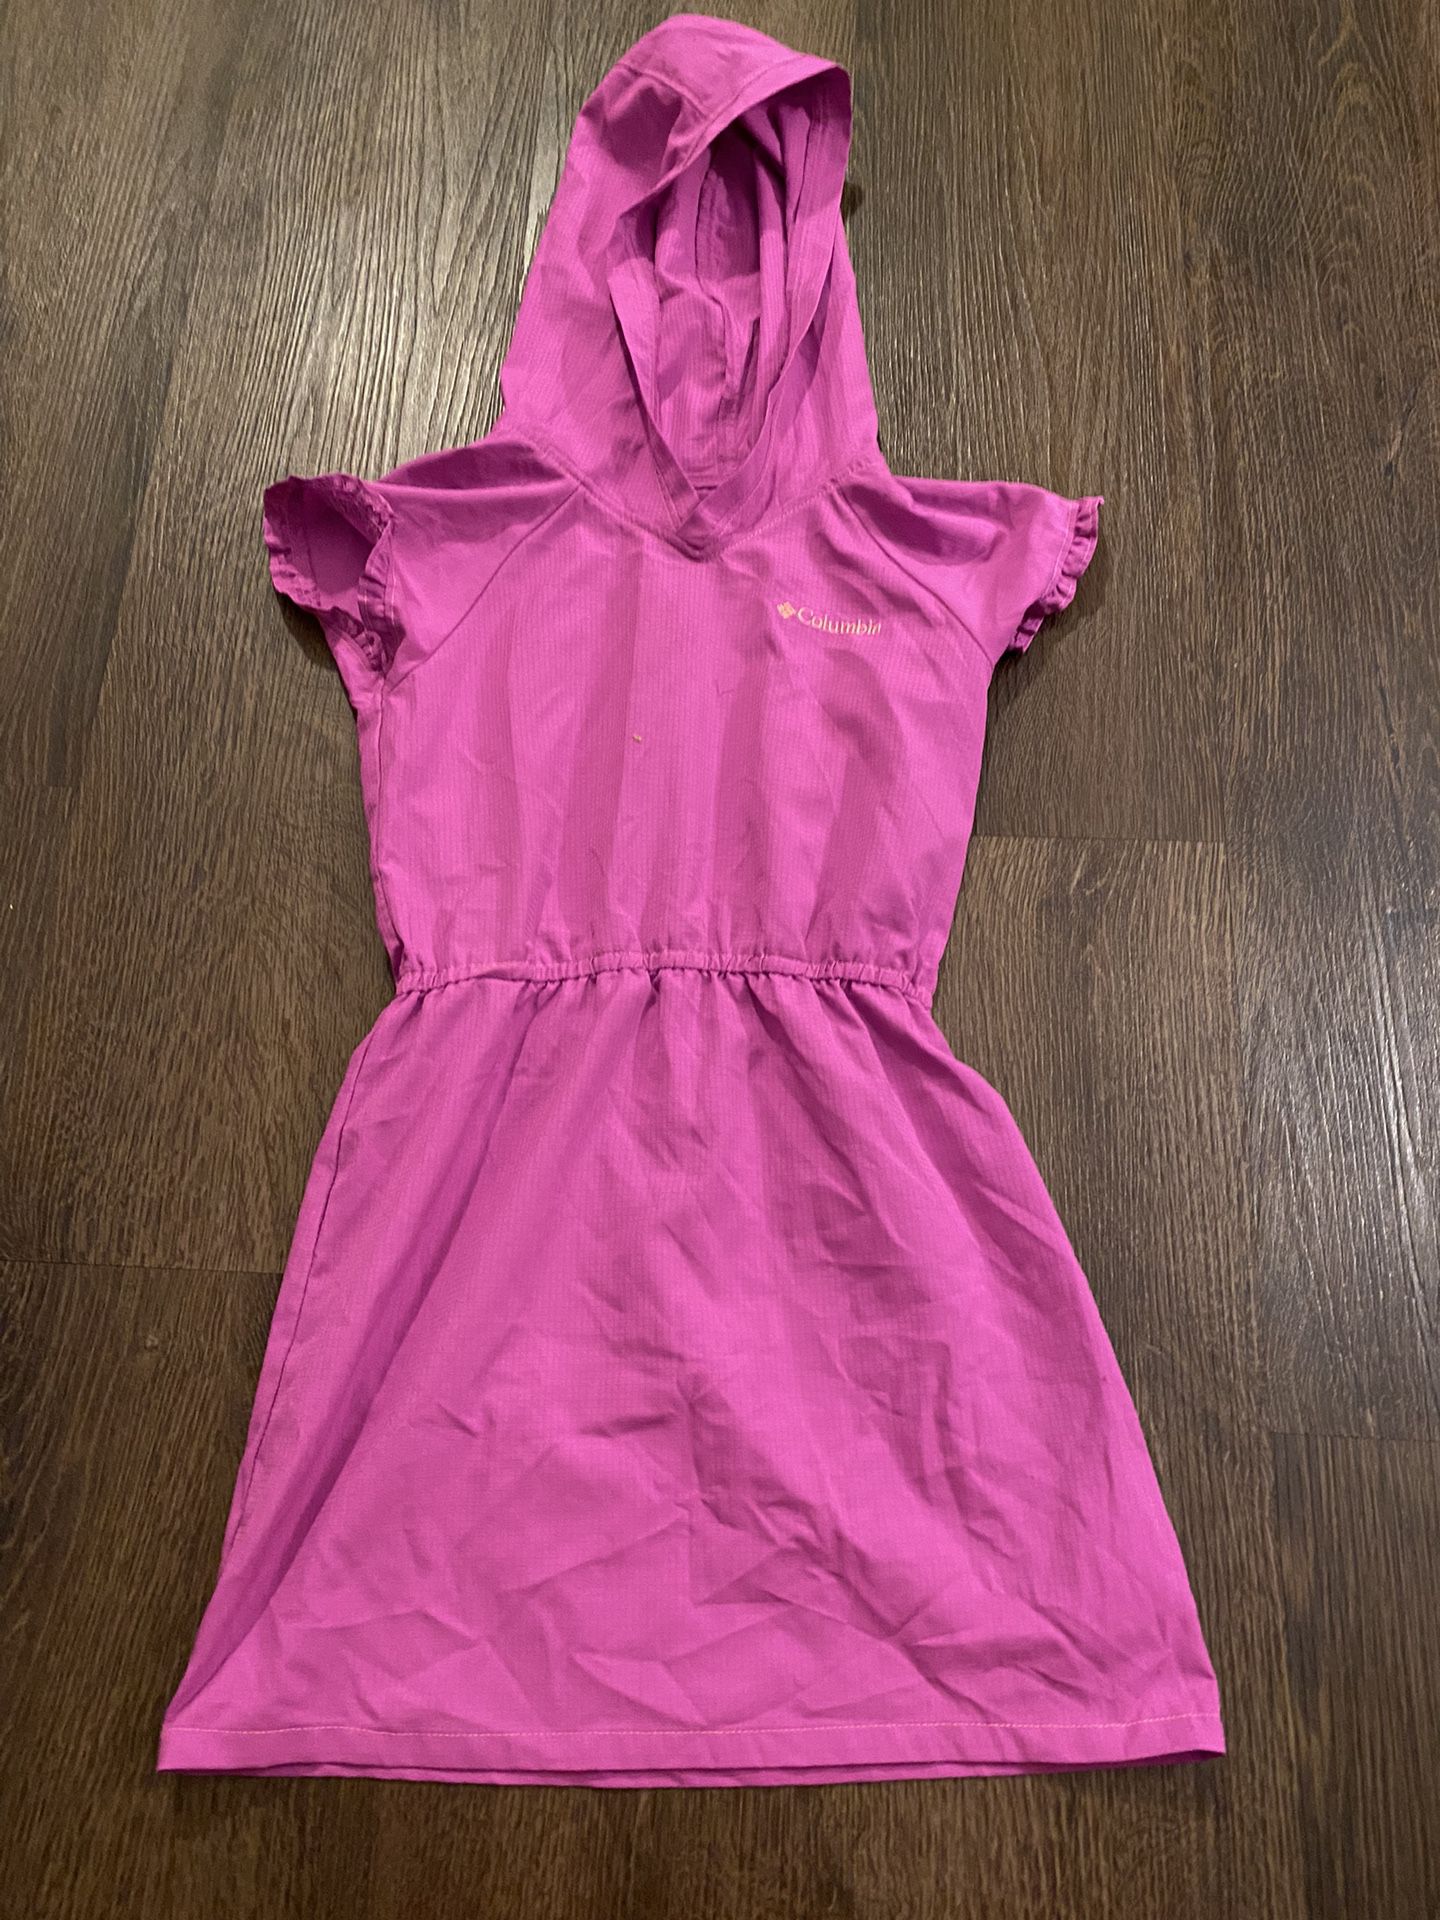 Girls Purple Dress By Columbia #3 